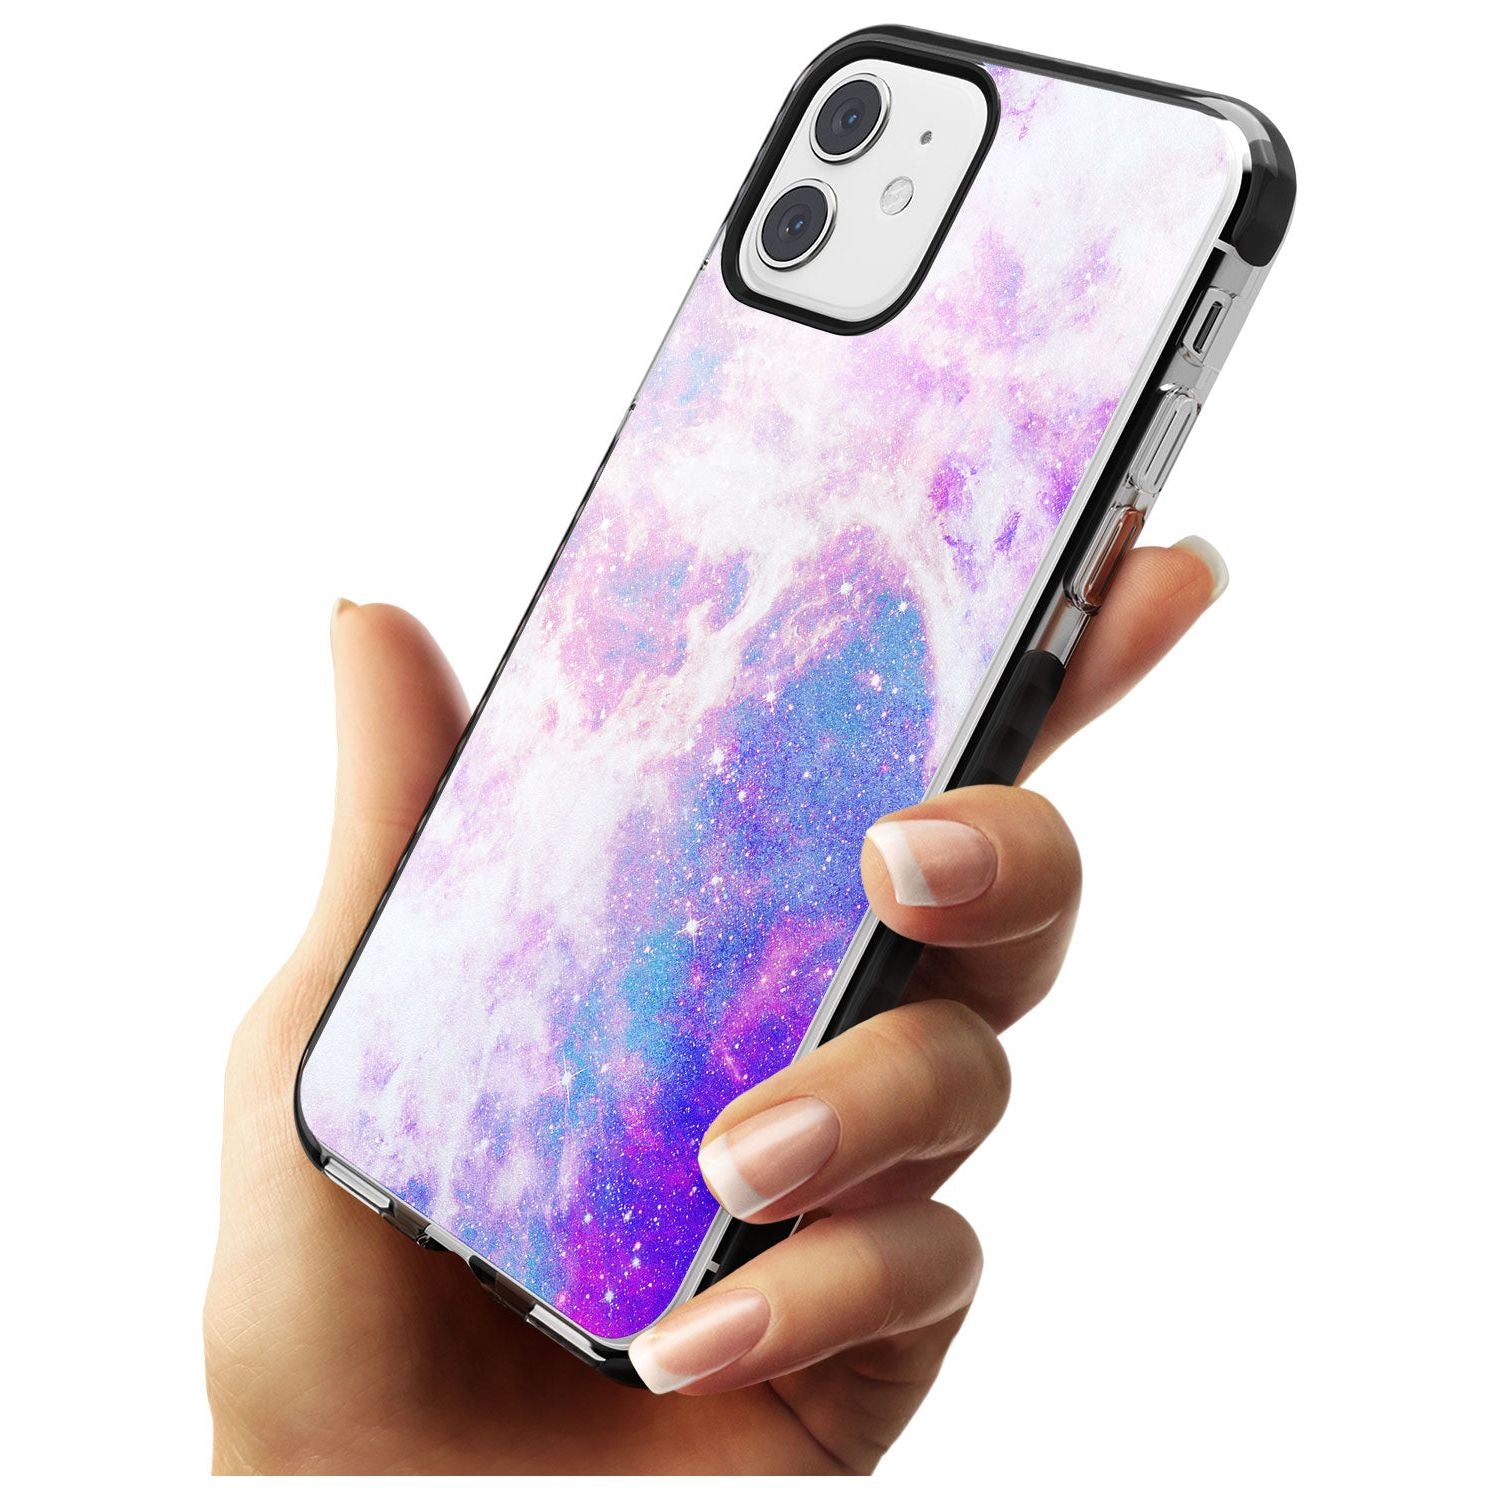 Purple & Blue Galaxy Pattern Design Black Impact Phone Case for iPhone 11